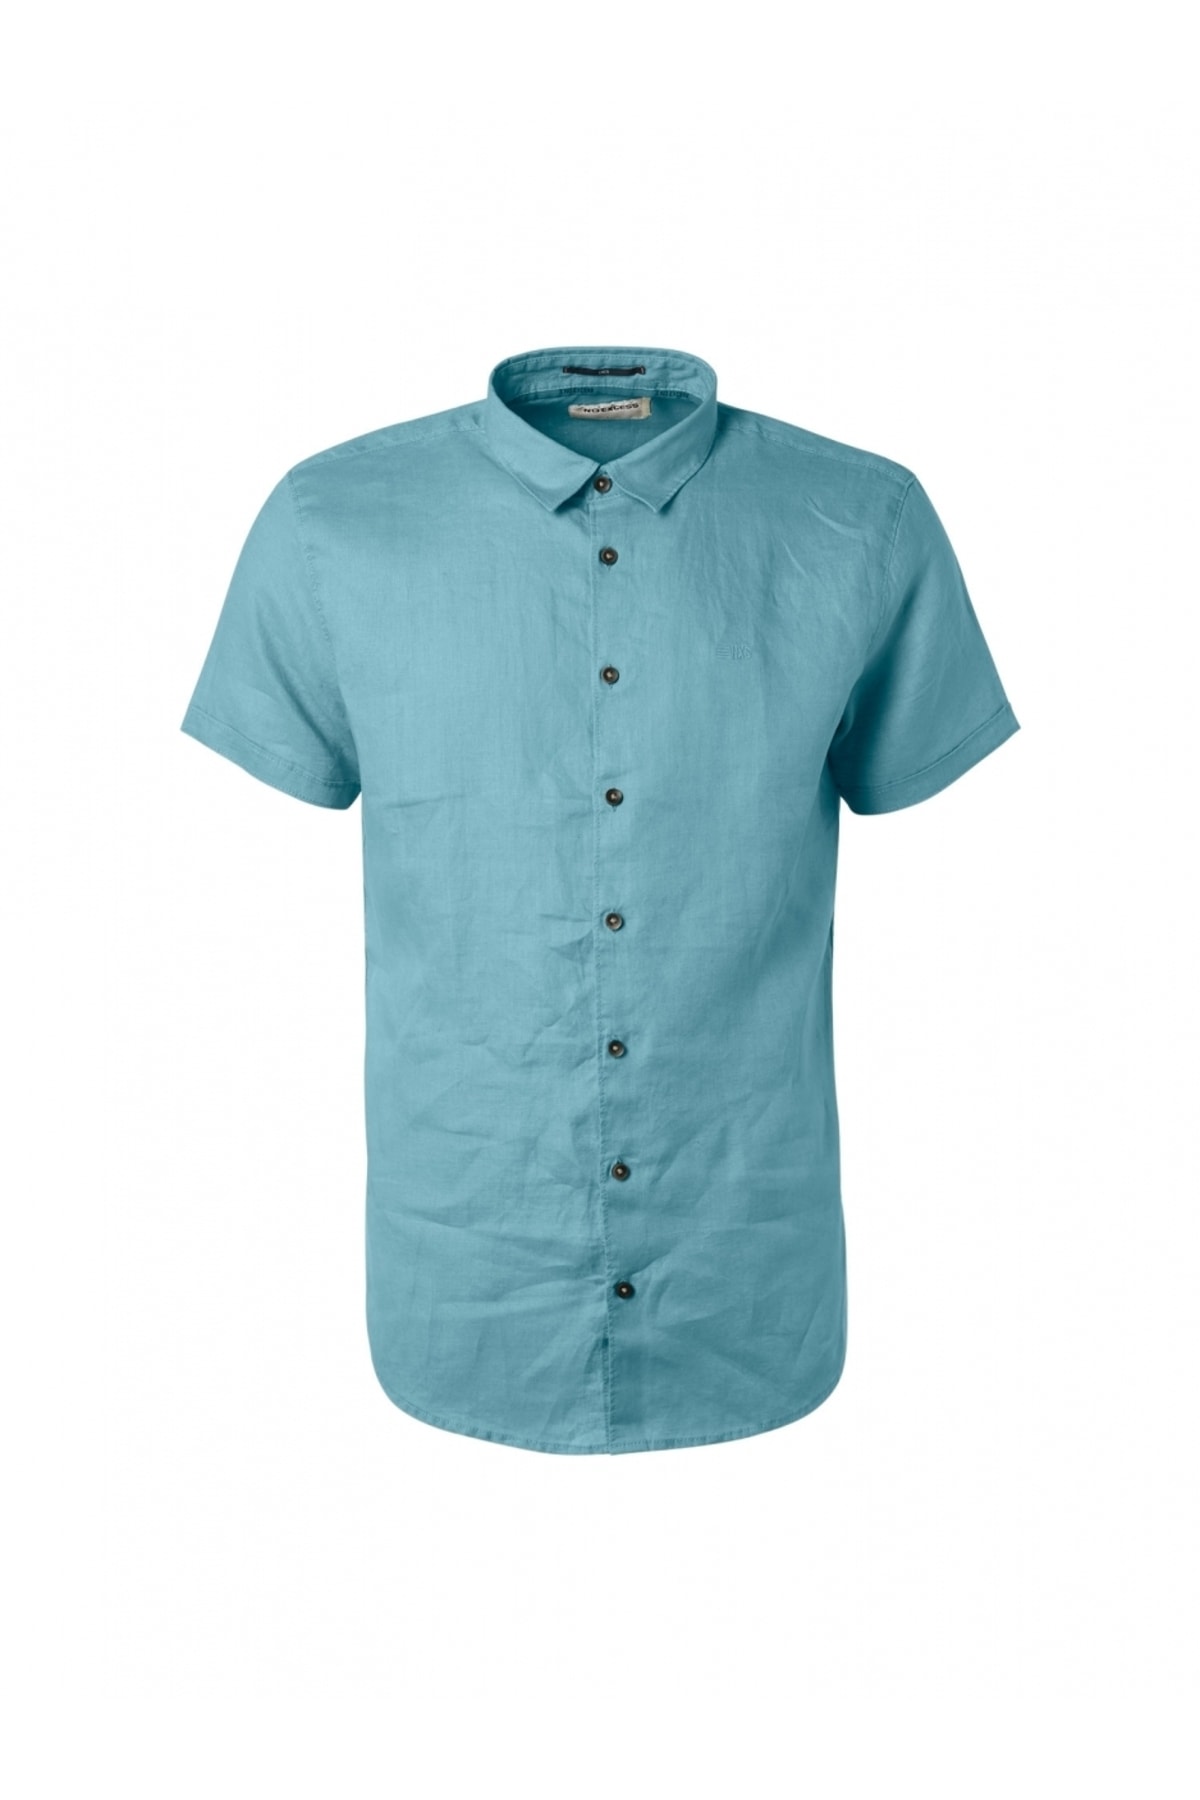 Рубашка - Бирюзовый - Классический крой No Excess рубашка бирюзовый классический крой no excess